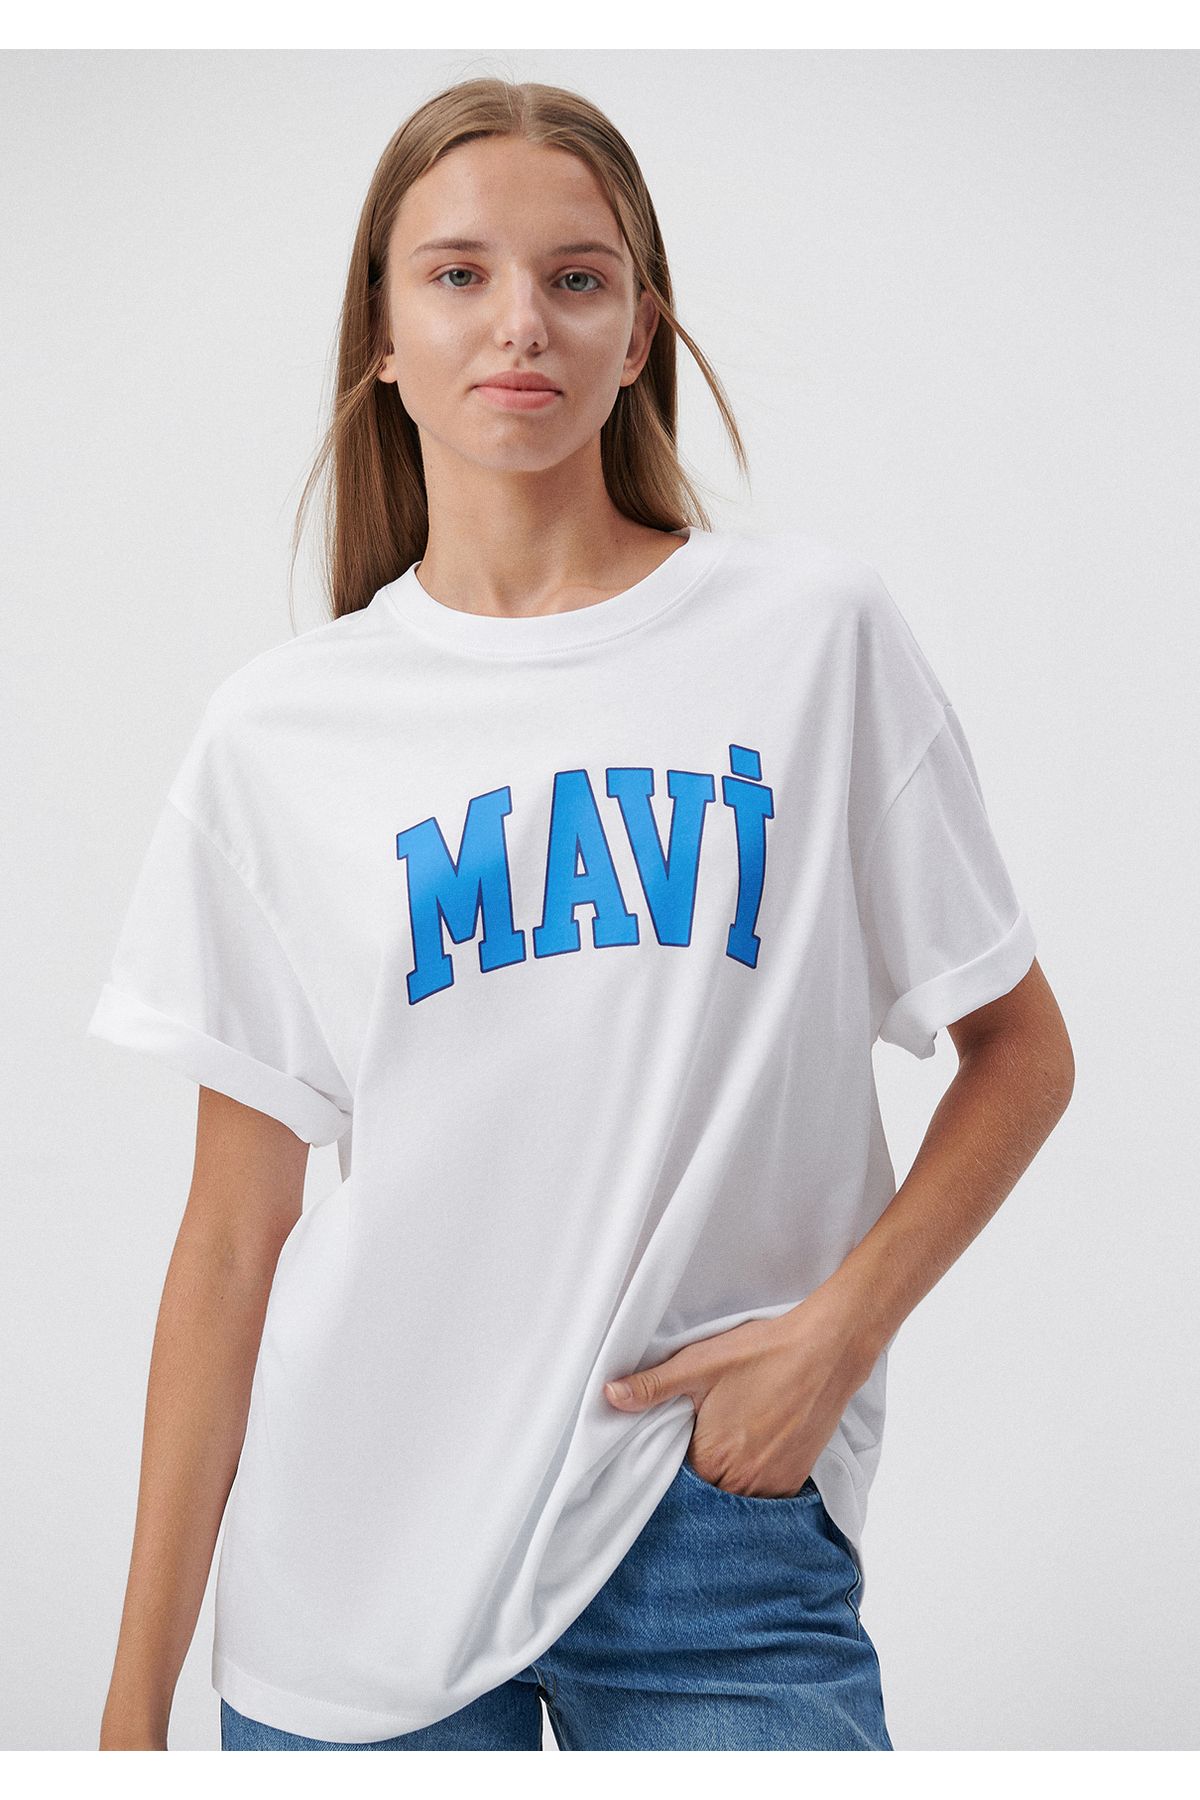 Mavi تی شرت سفید چاپ لوگو سایز بزرگ / برش عریض 1600843-70000